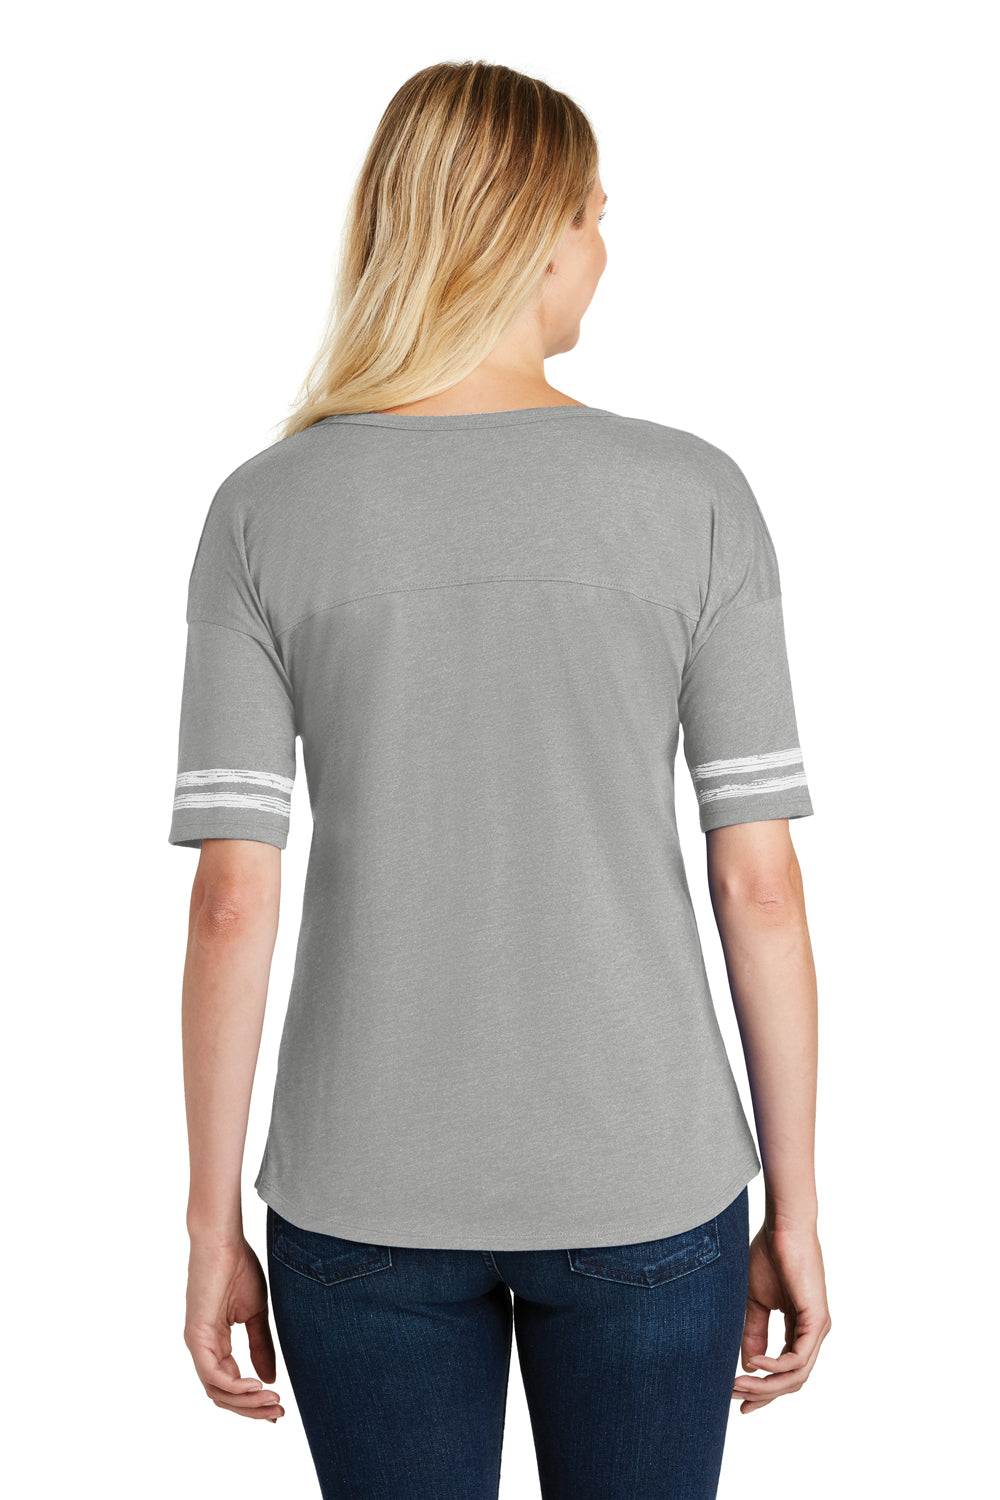 District DT487 Womens Scorecard Short Sleeve Crewneck T-Shirt Heather Nickel Grey/White Back